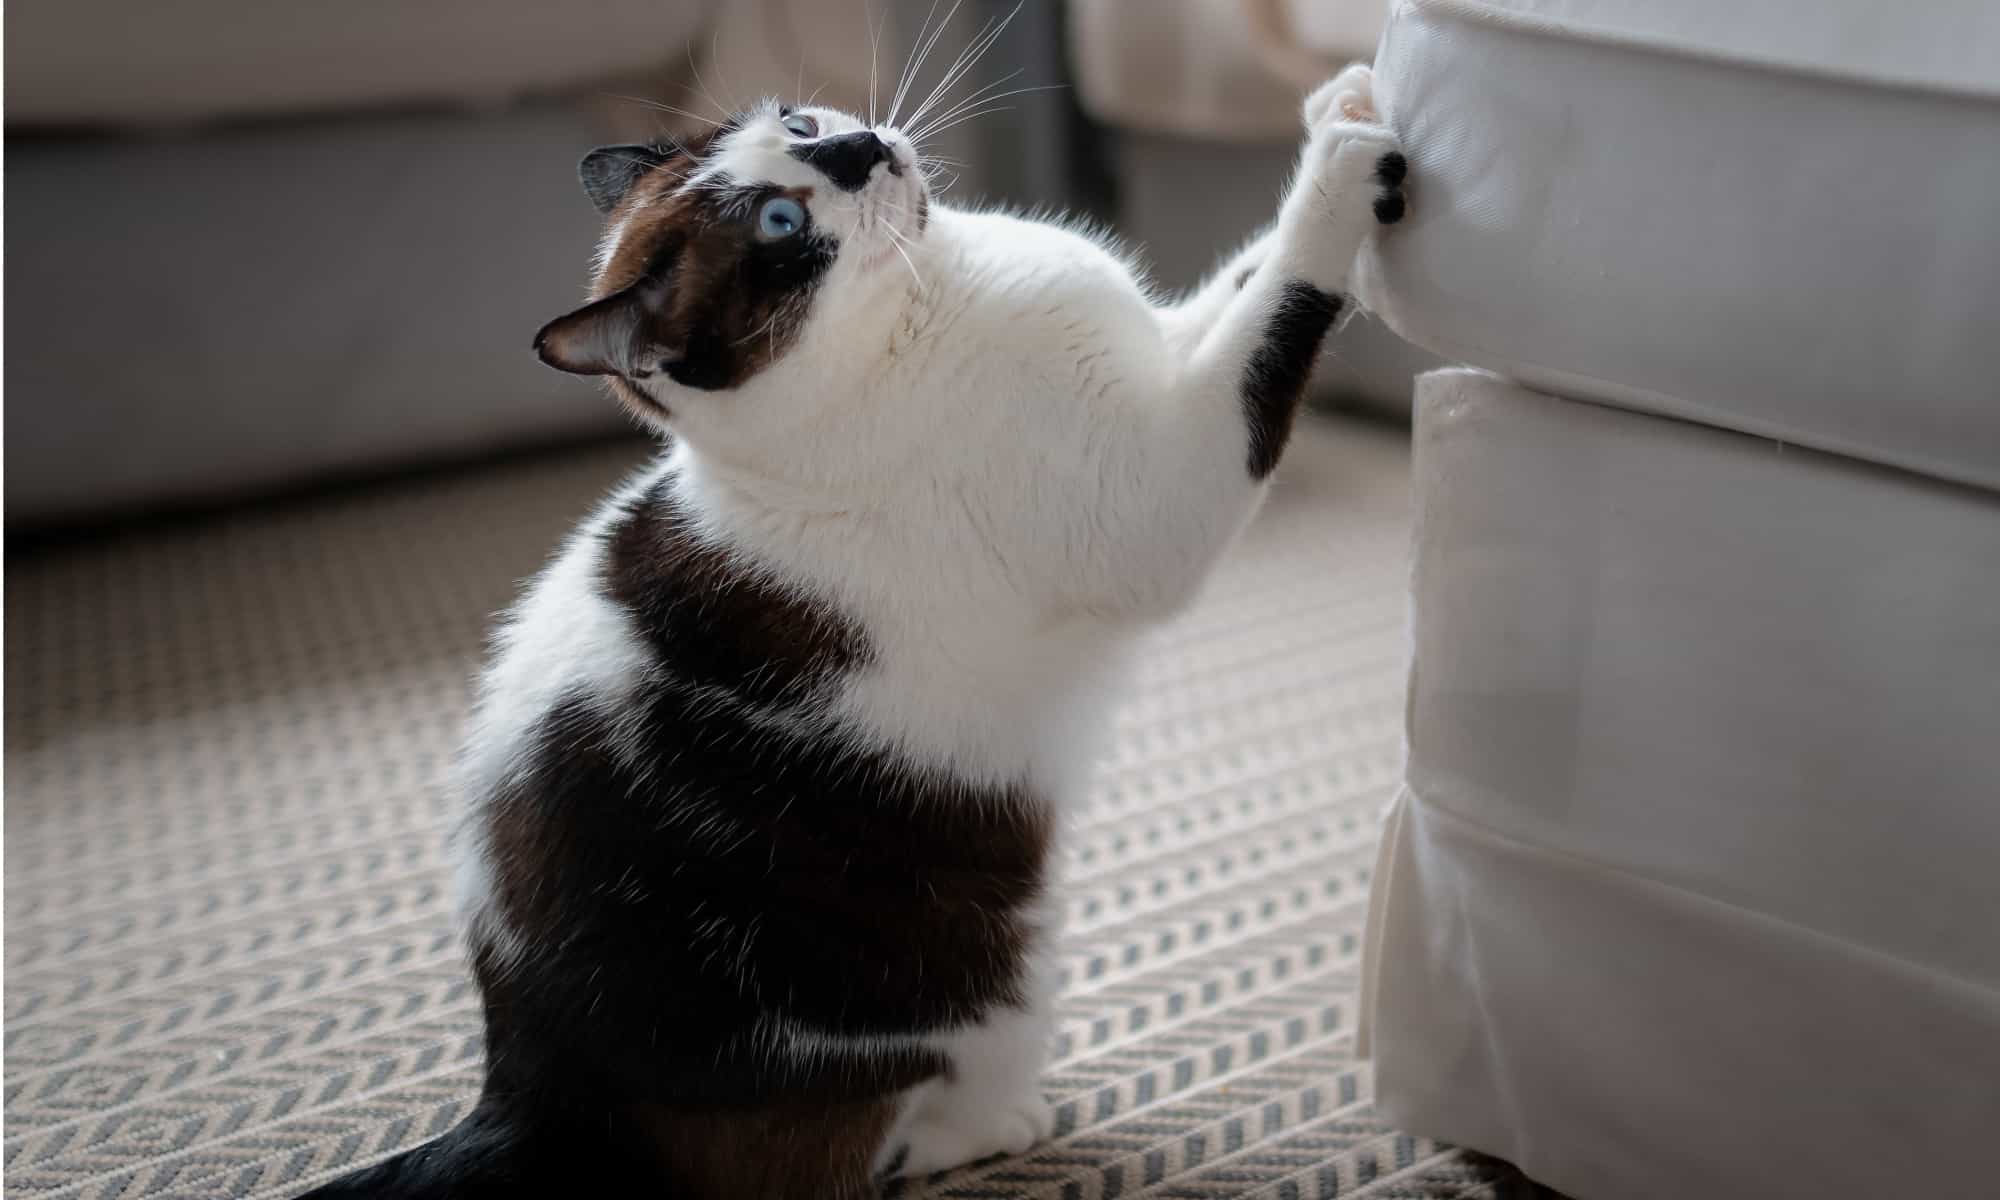 Black and white cat scratching furniture